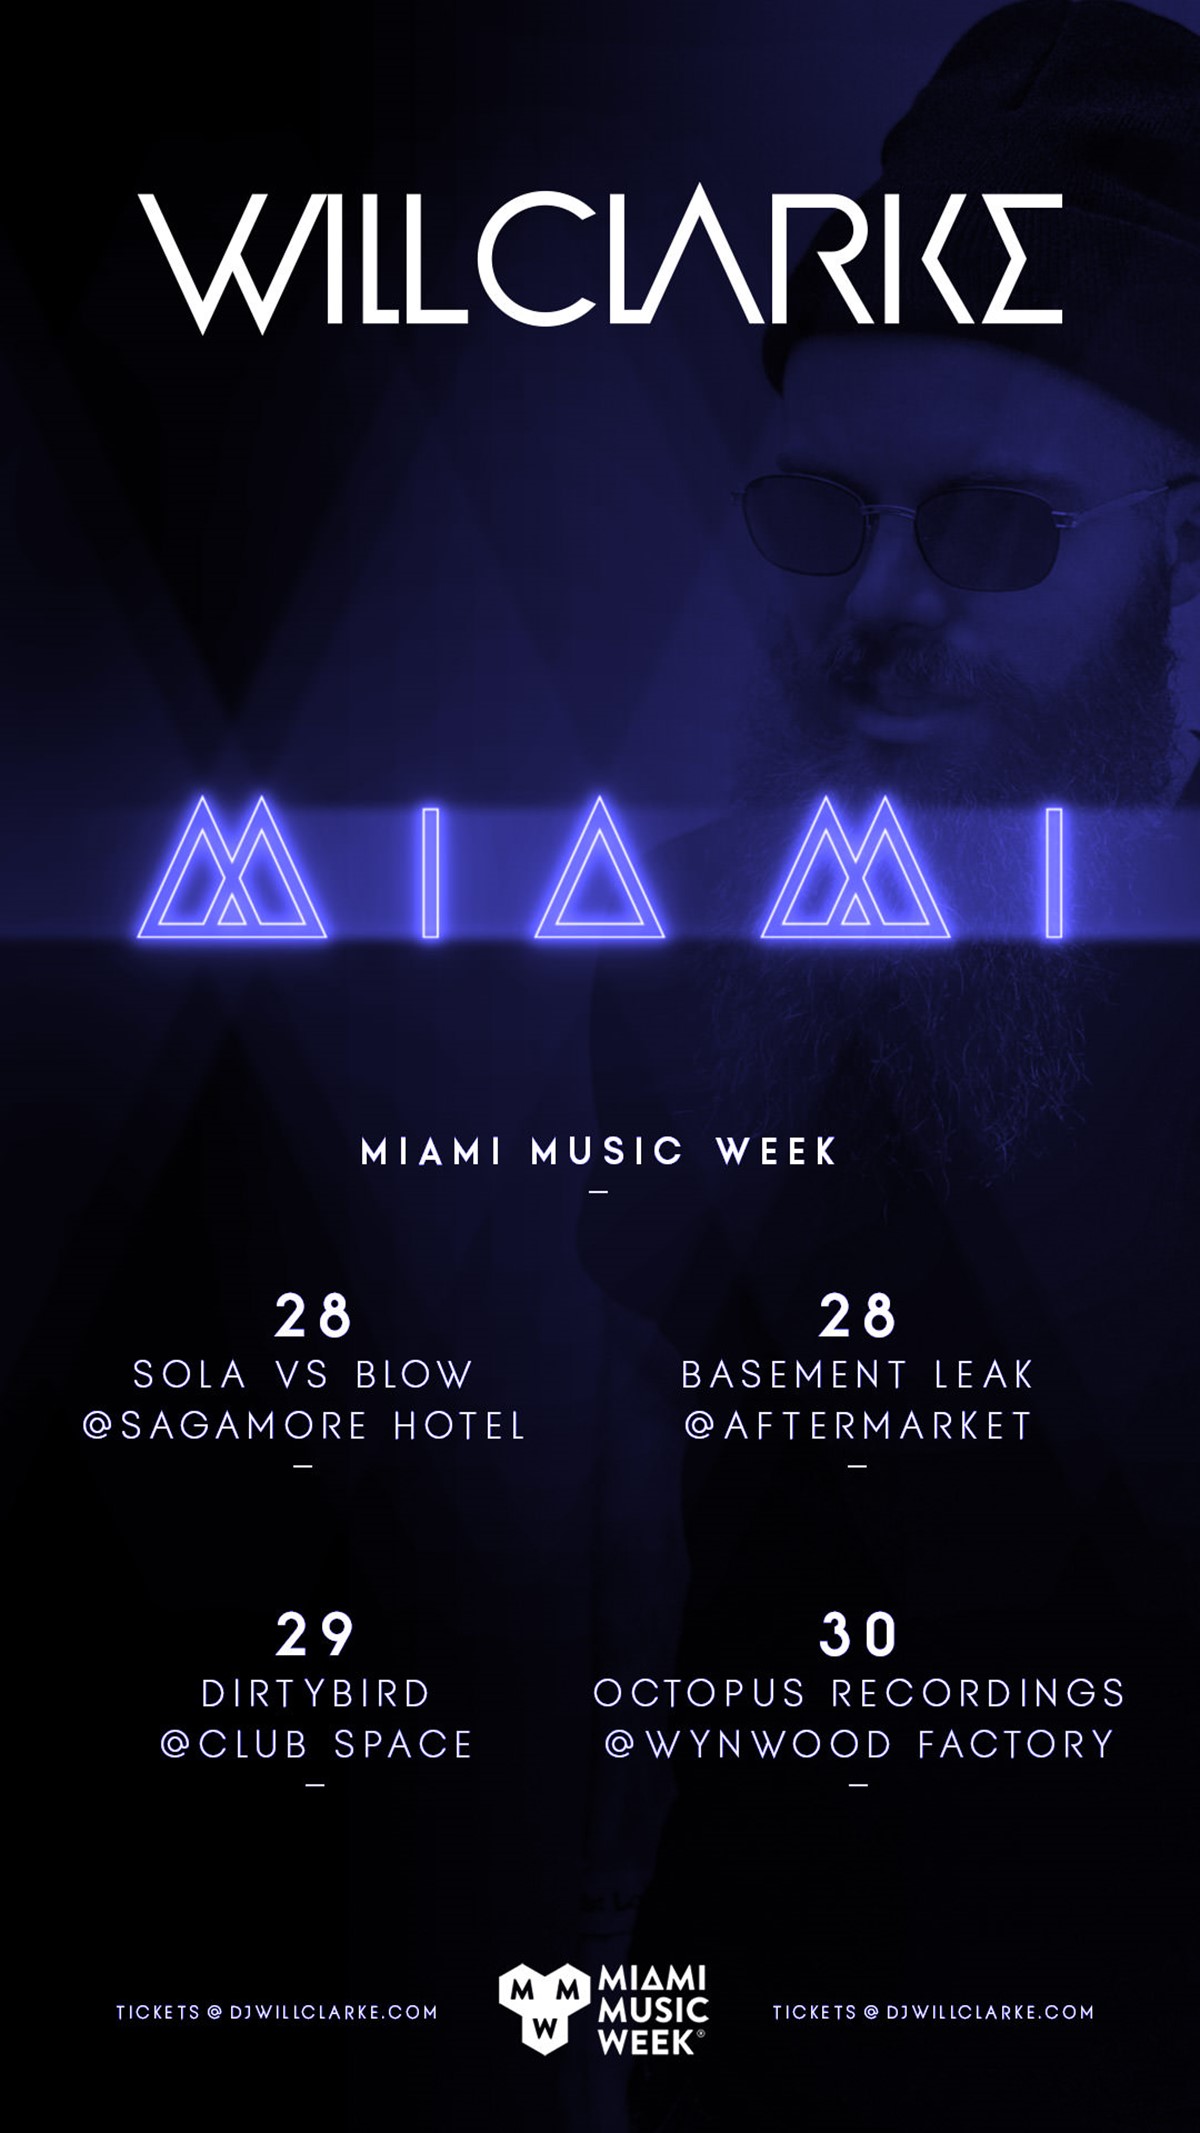 Will Clarke. Miami Music Week. Instagram stories digital promo. Brand identity design by Superfried.